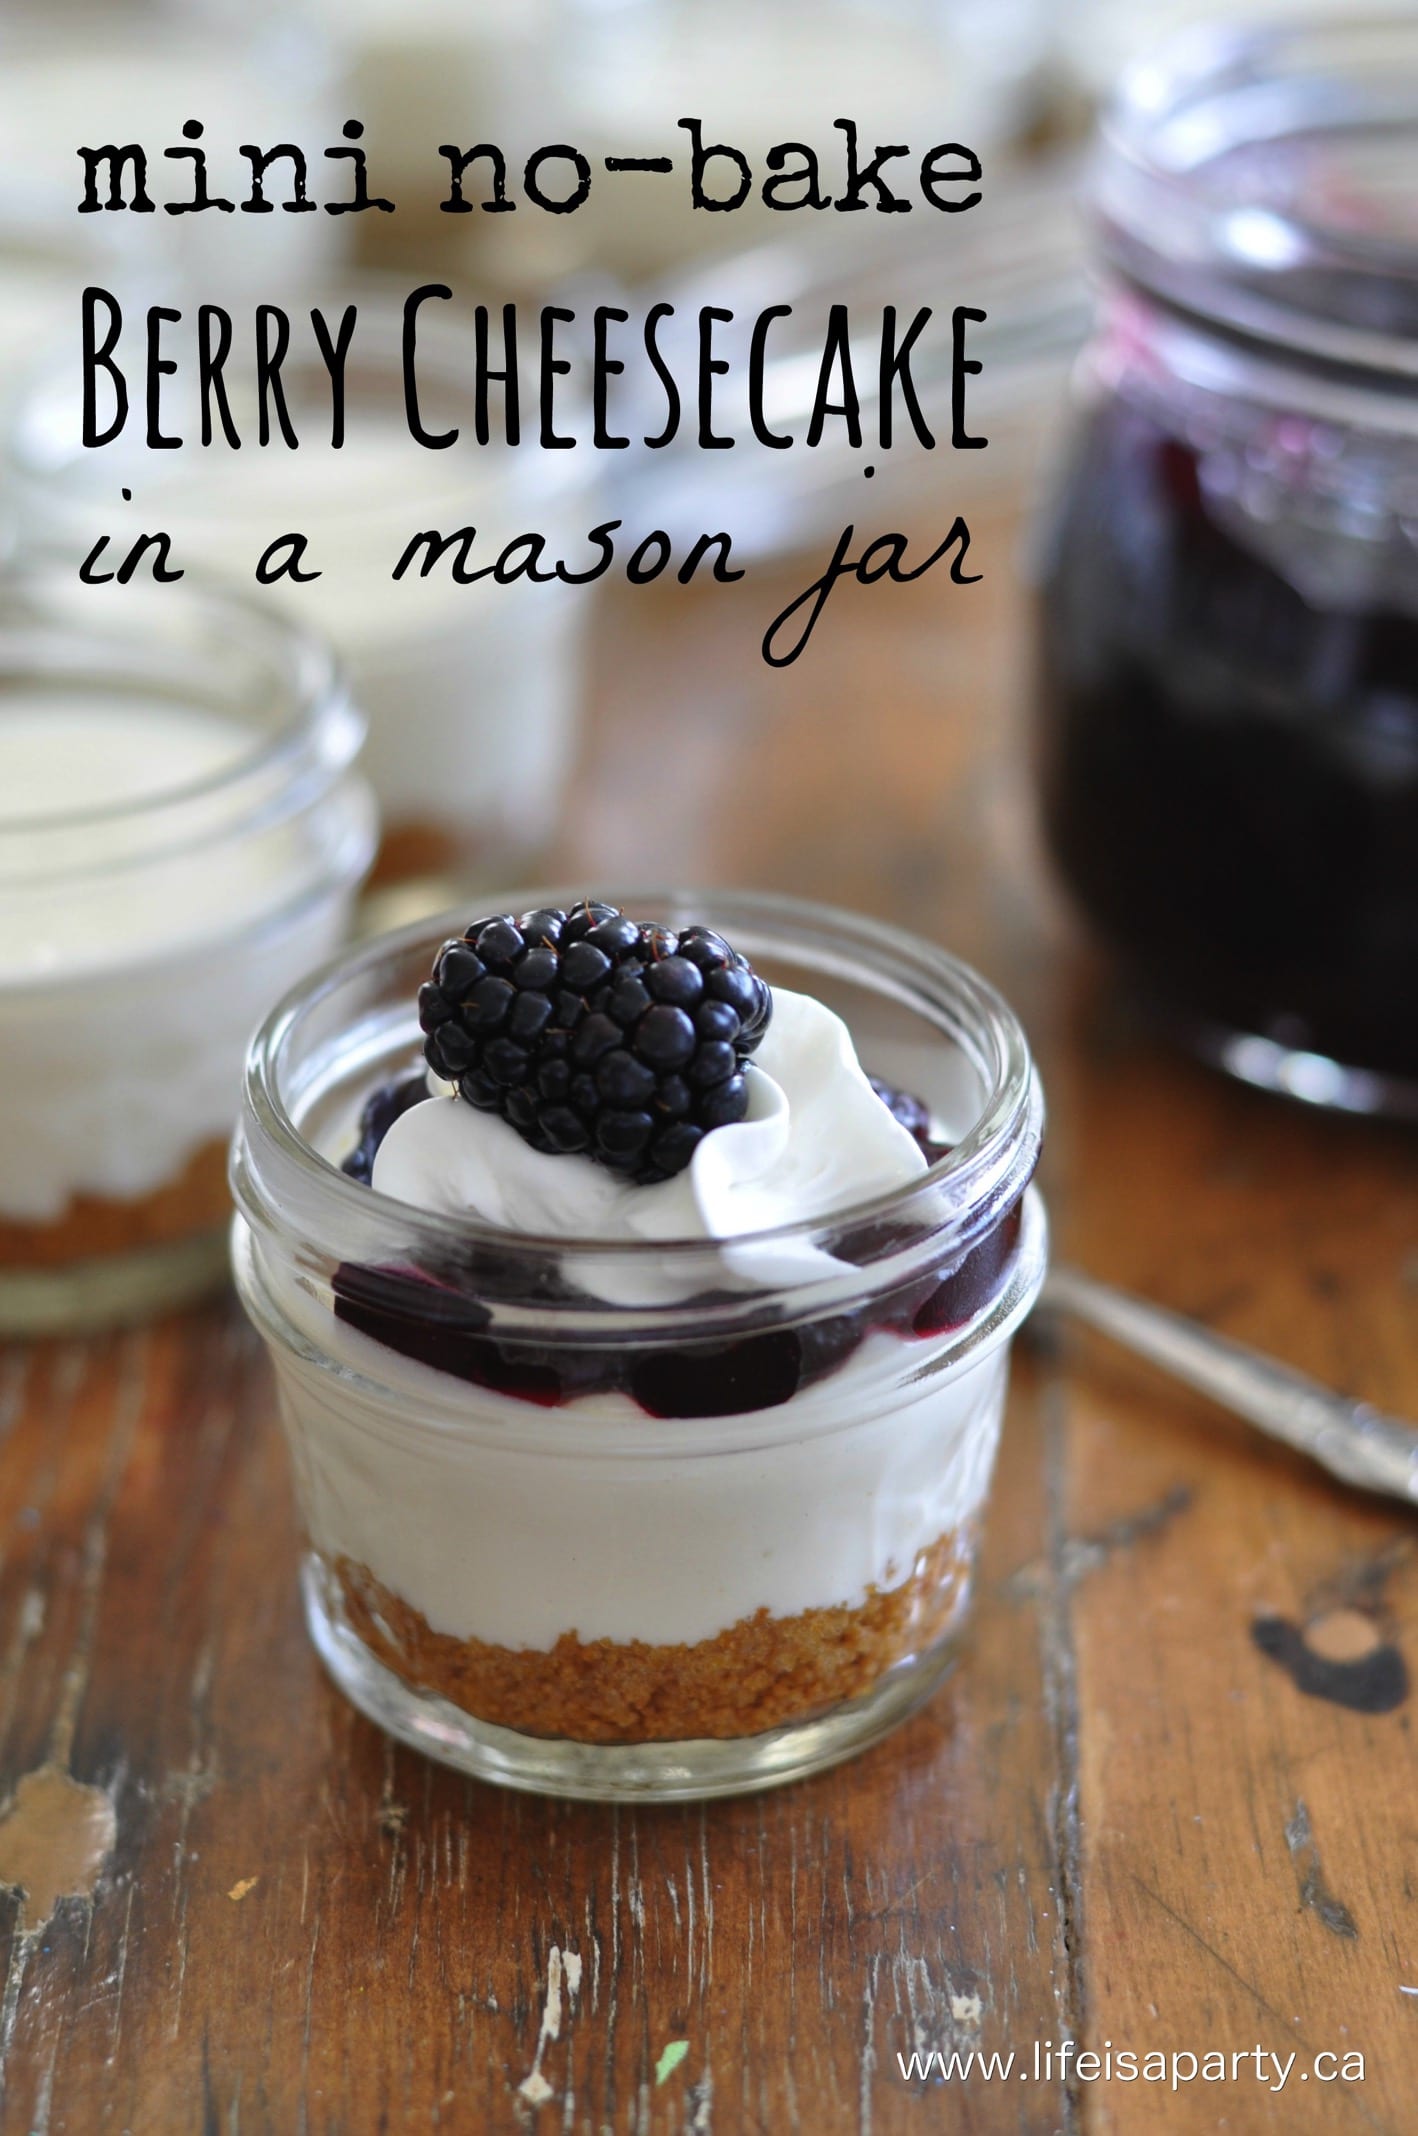 Mini No-Bake Berry Cheese Cake In A Mason Jar -the perfect cute, portable, easy treat!